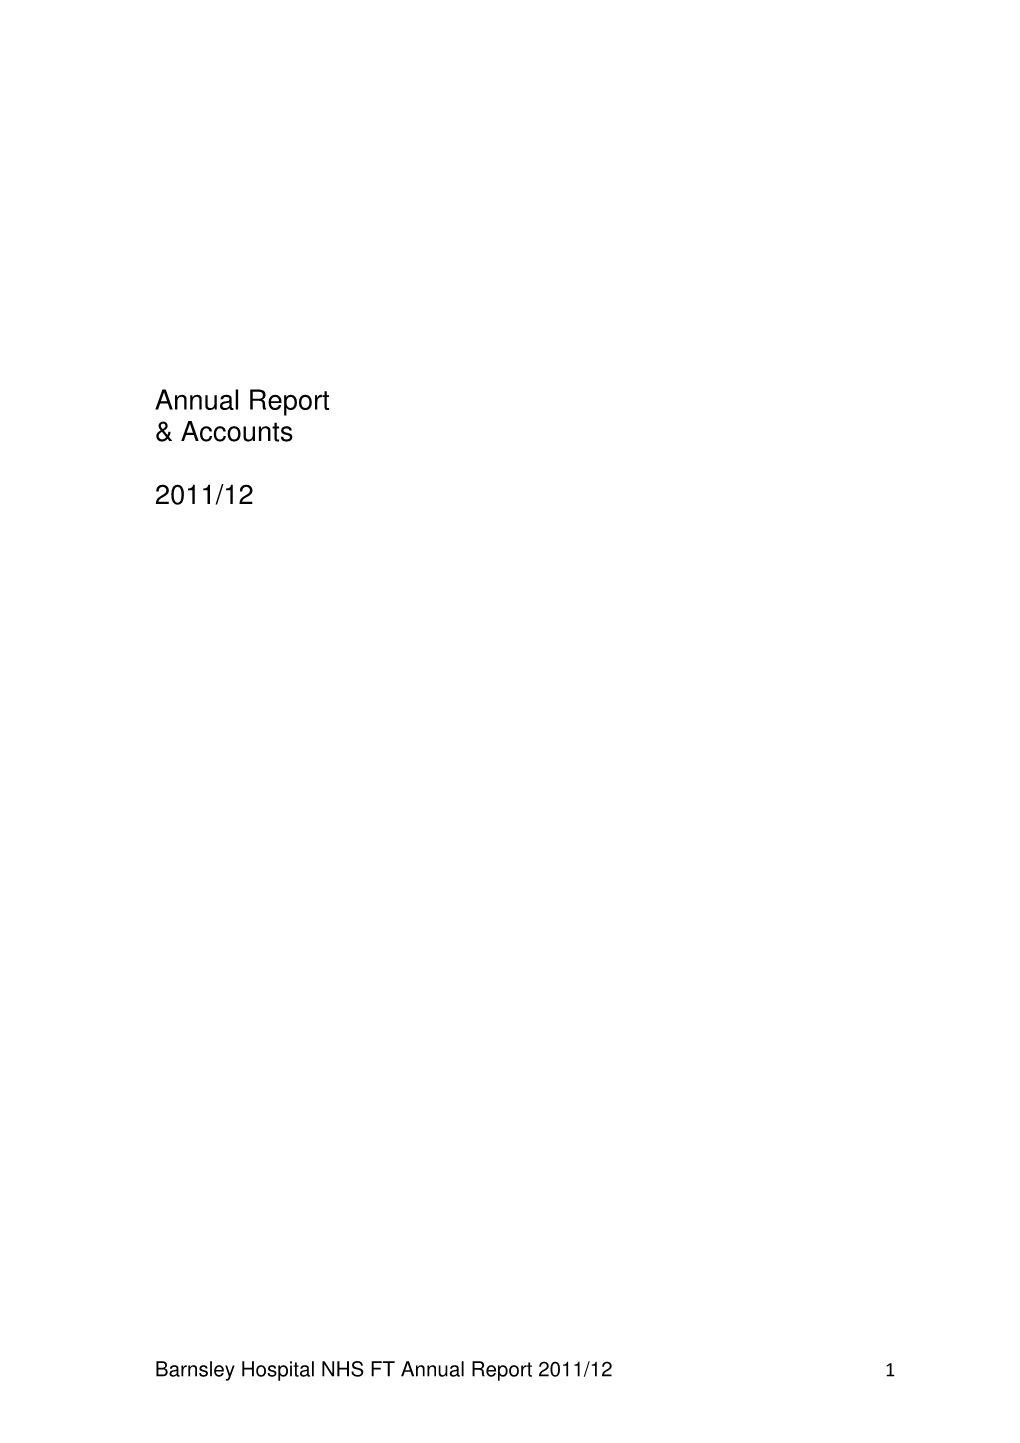 Annual Report & Accounts 2011/12